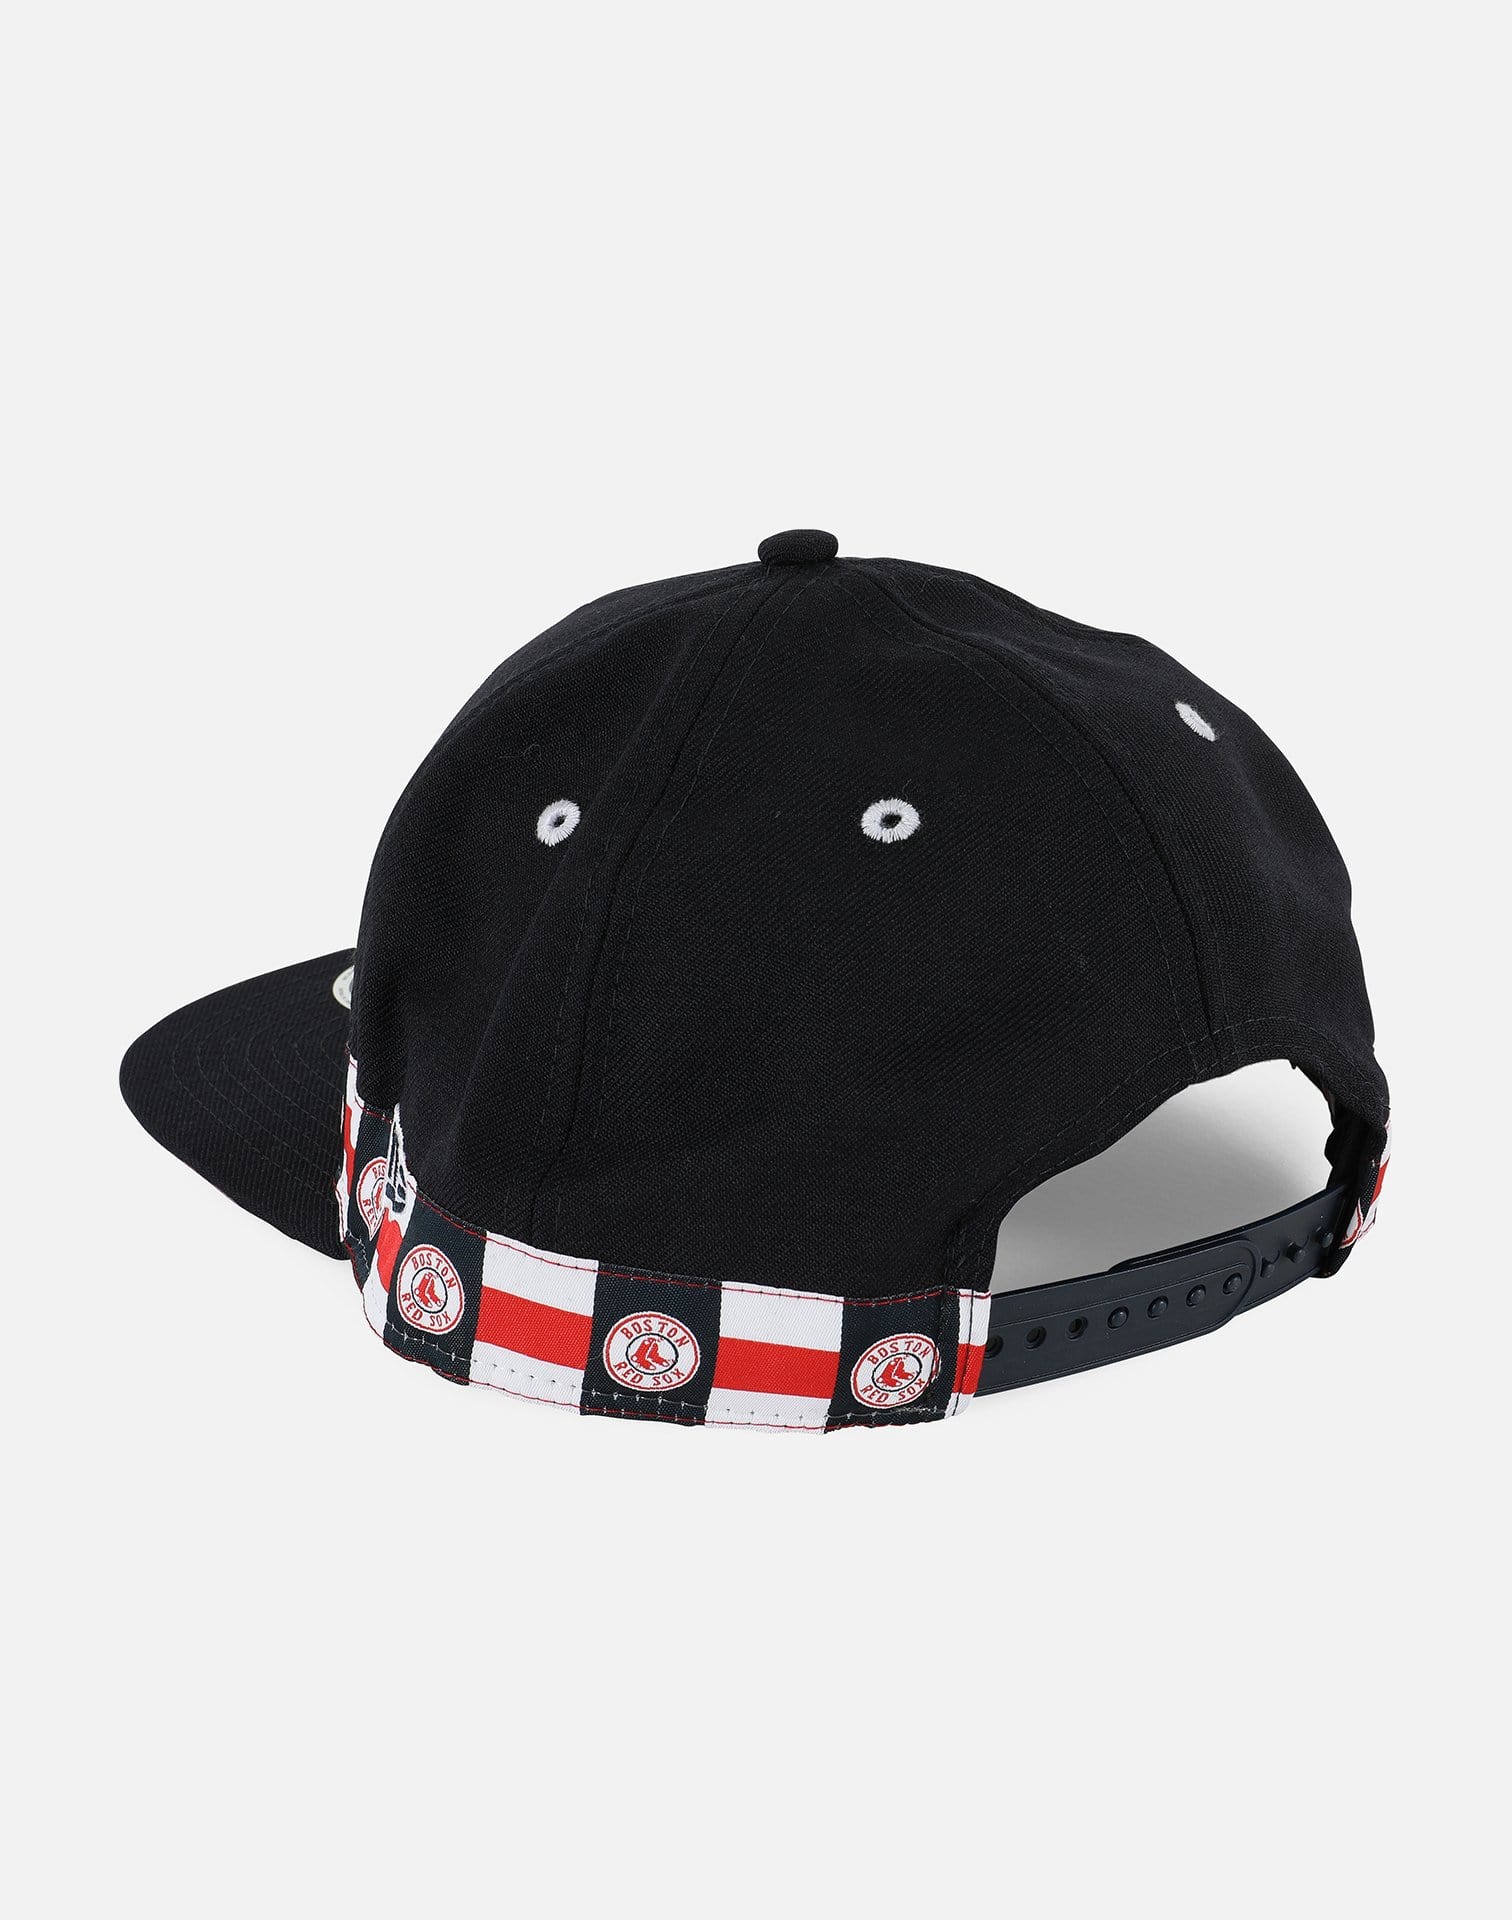 New Era Exclusive Customs MLB Boston Red Sox Snapback Hat